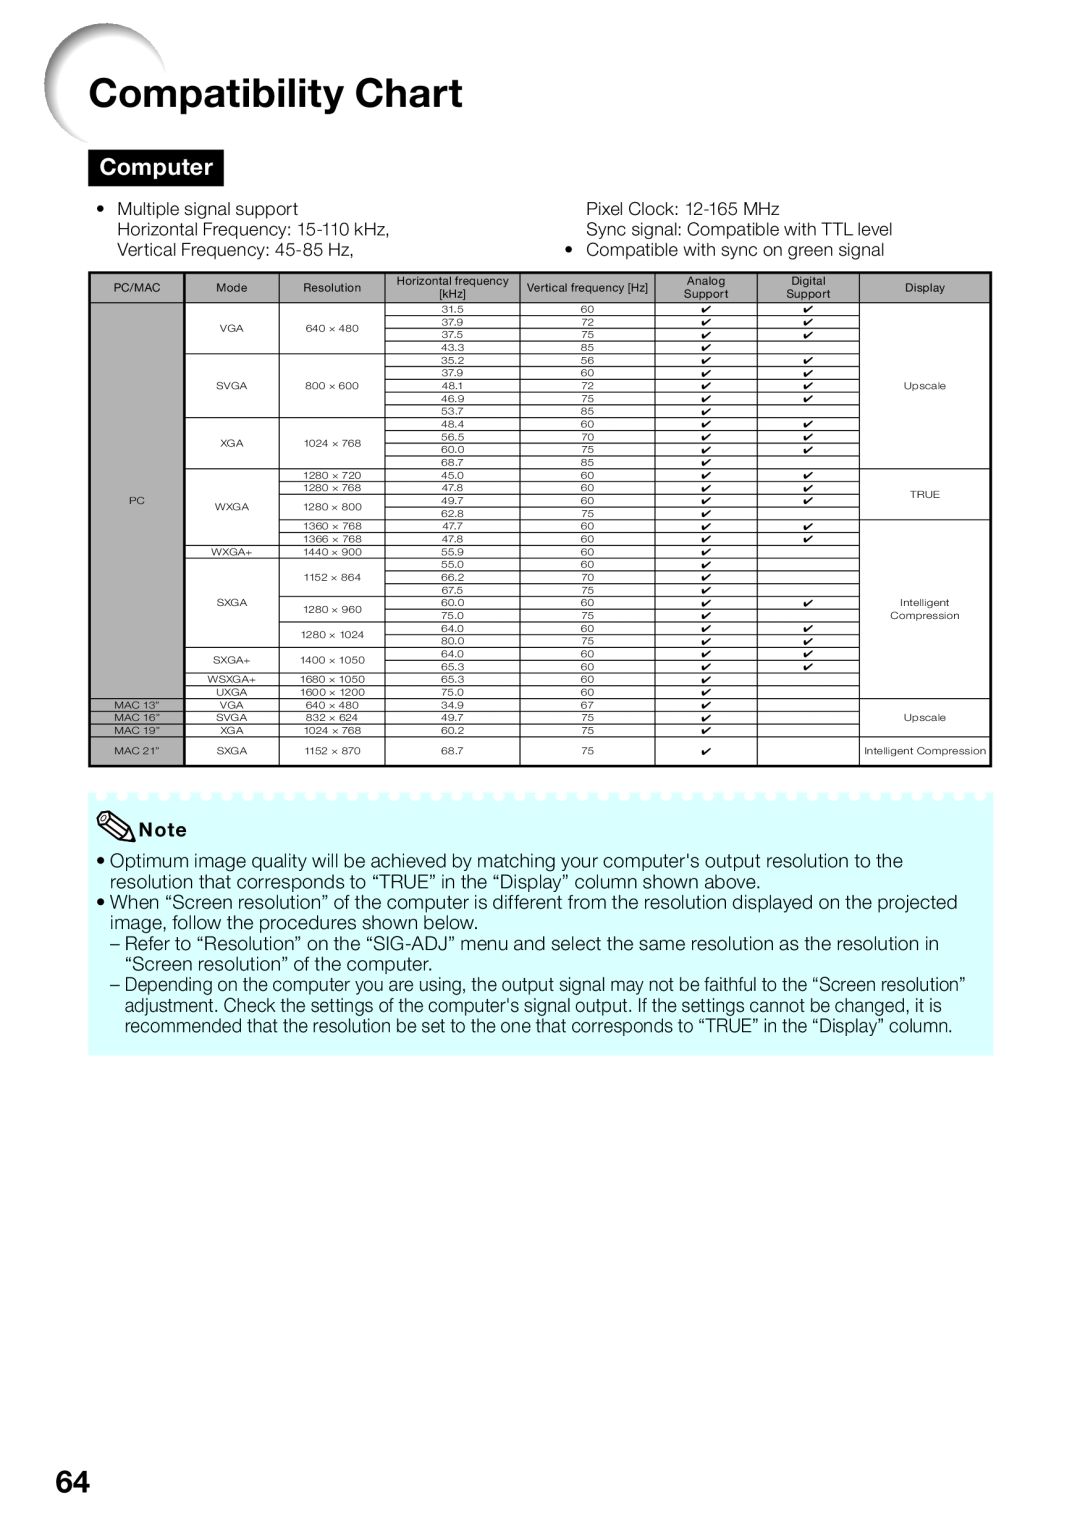 Sharp PG-LW2000, PGLW2000 appendix Compatibility Chart, Computer 